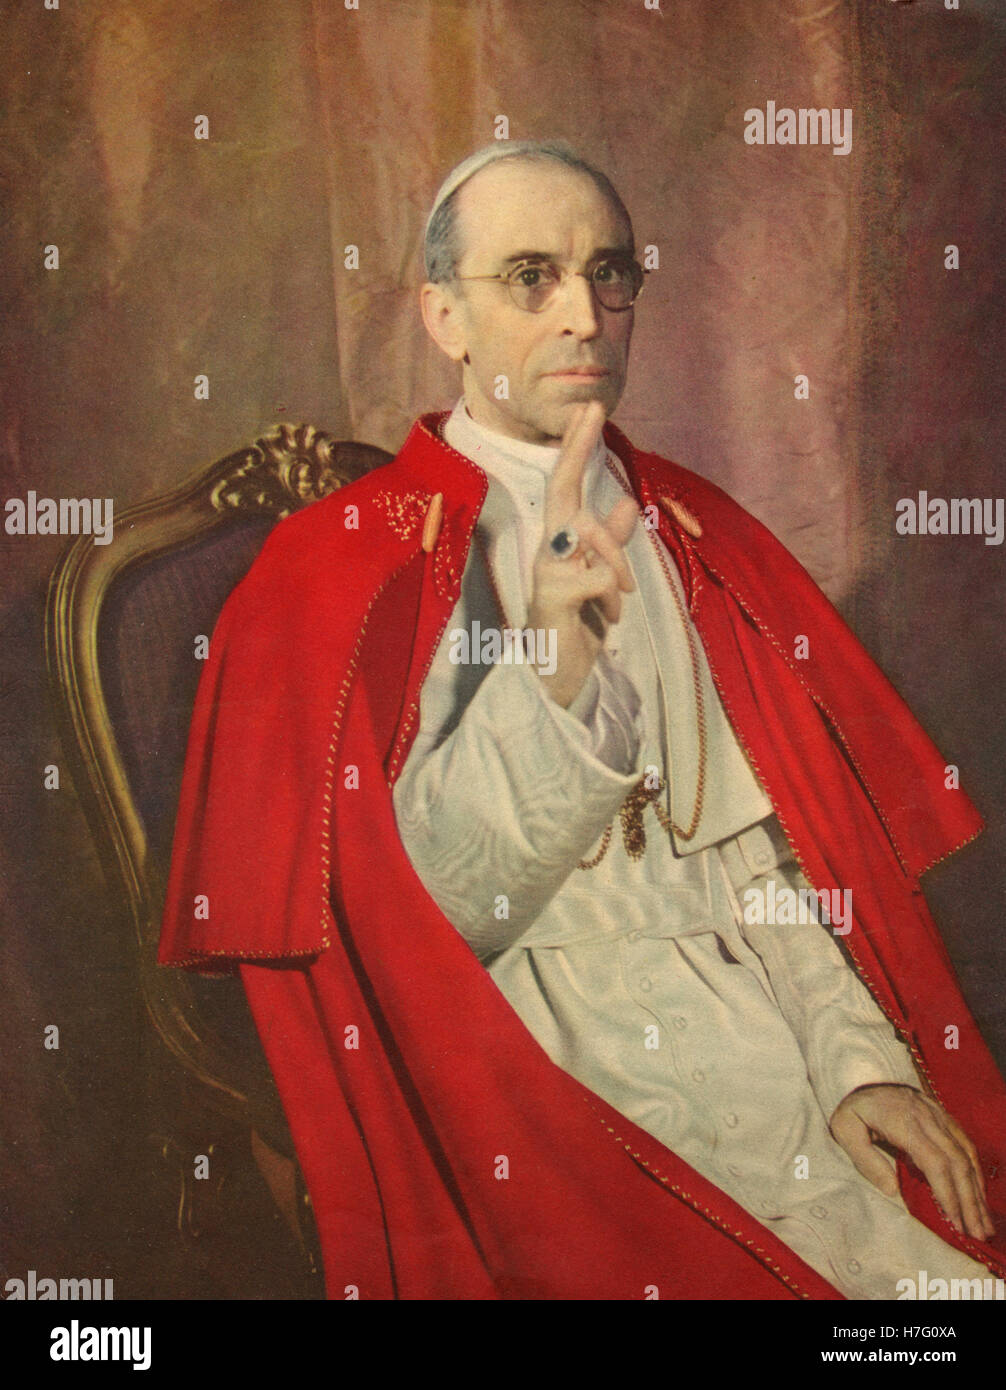 Portrait of Pope Pius XII Stock Photo